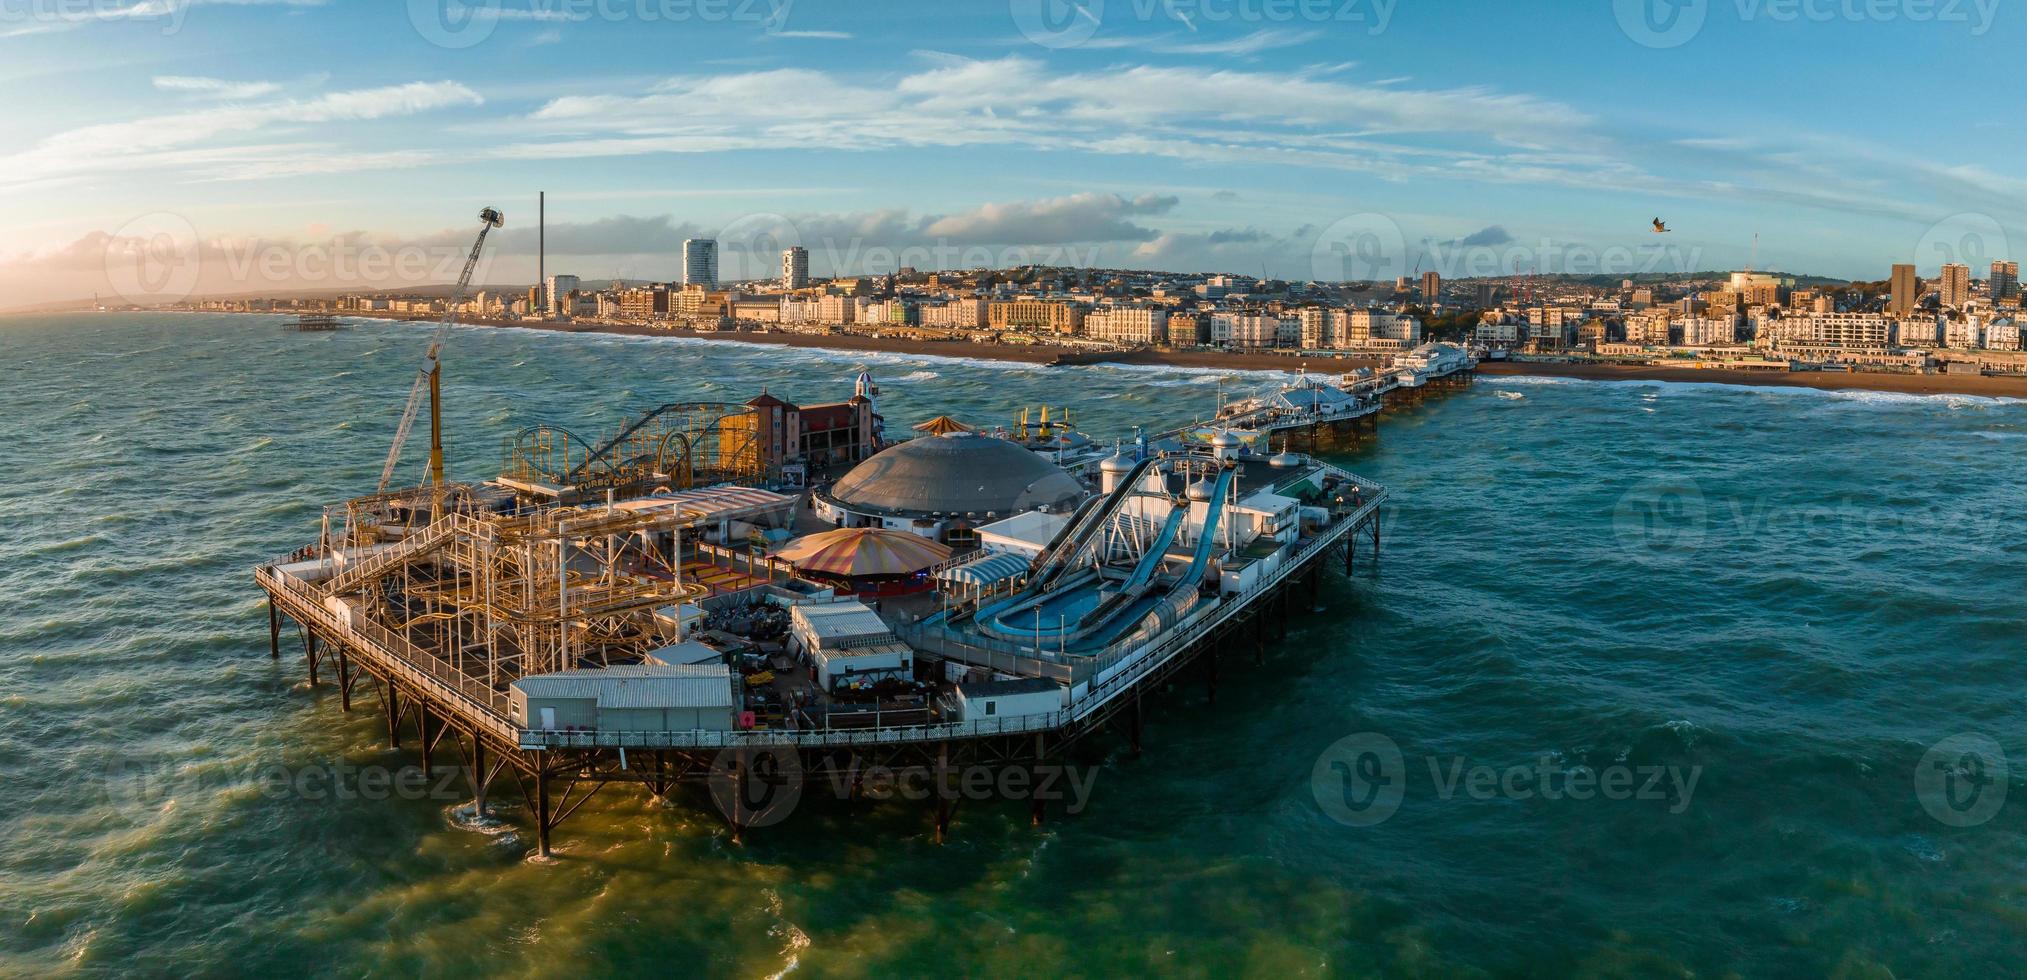 antenn se av Brighton palats pir, med de havet Bakom. foto